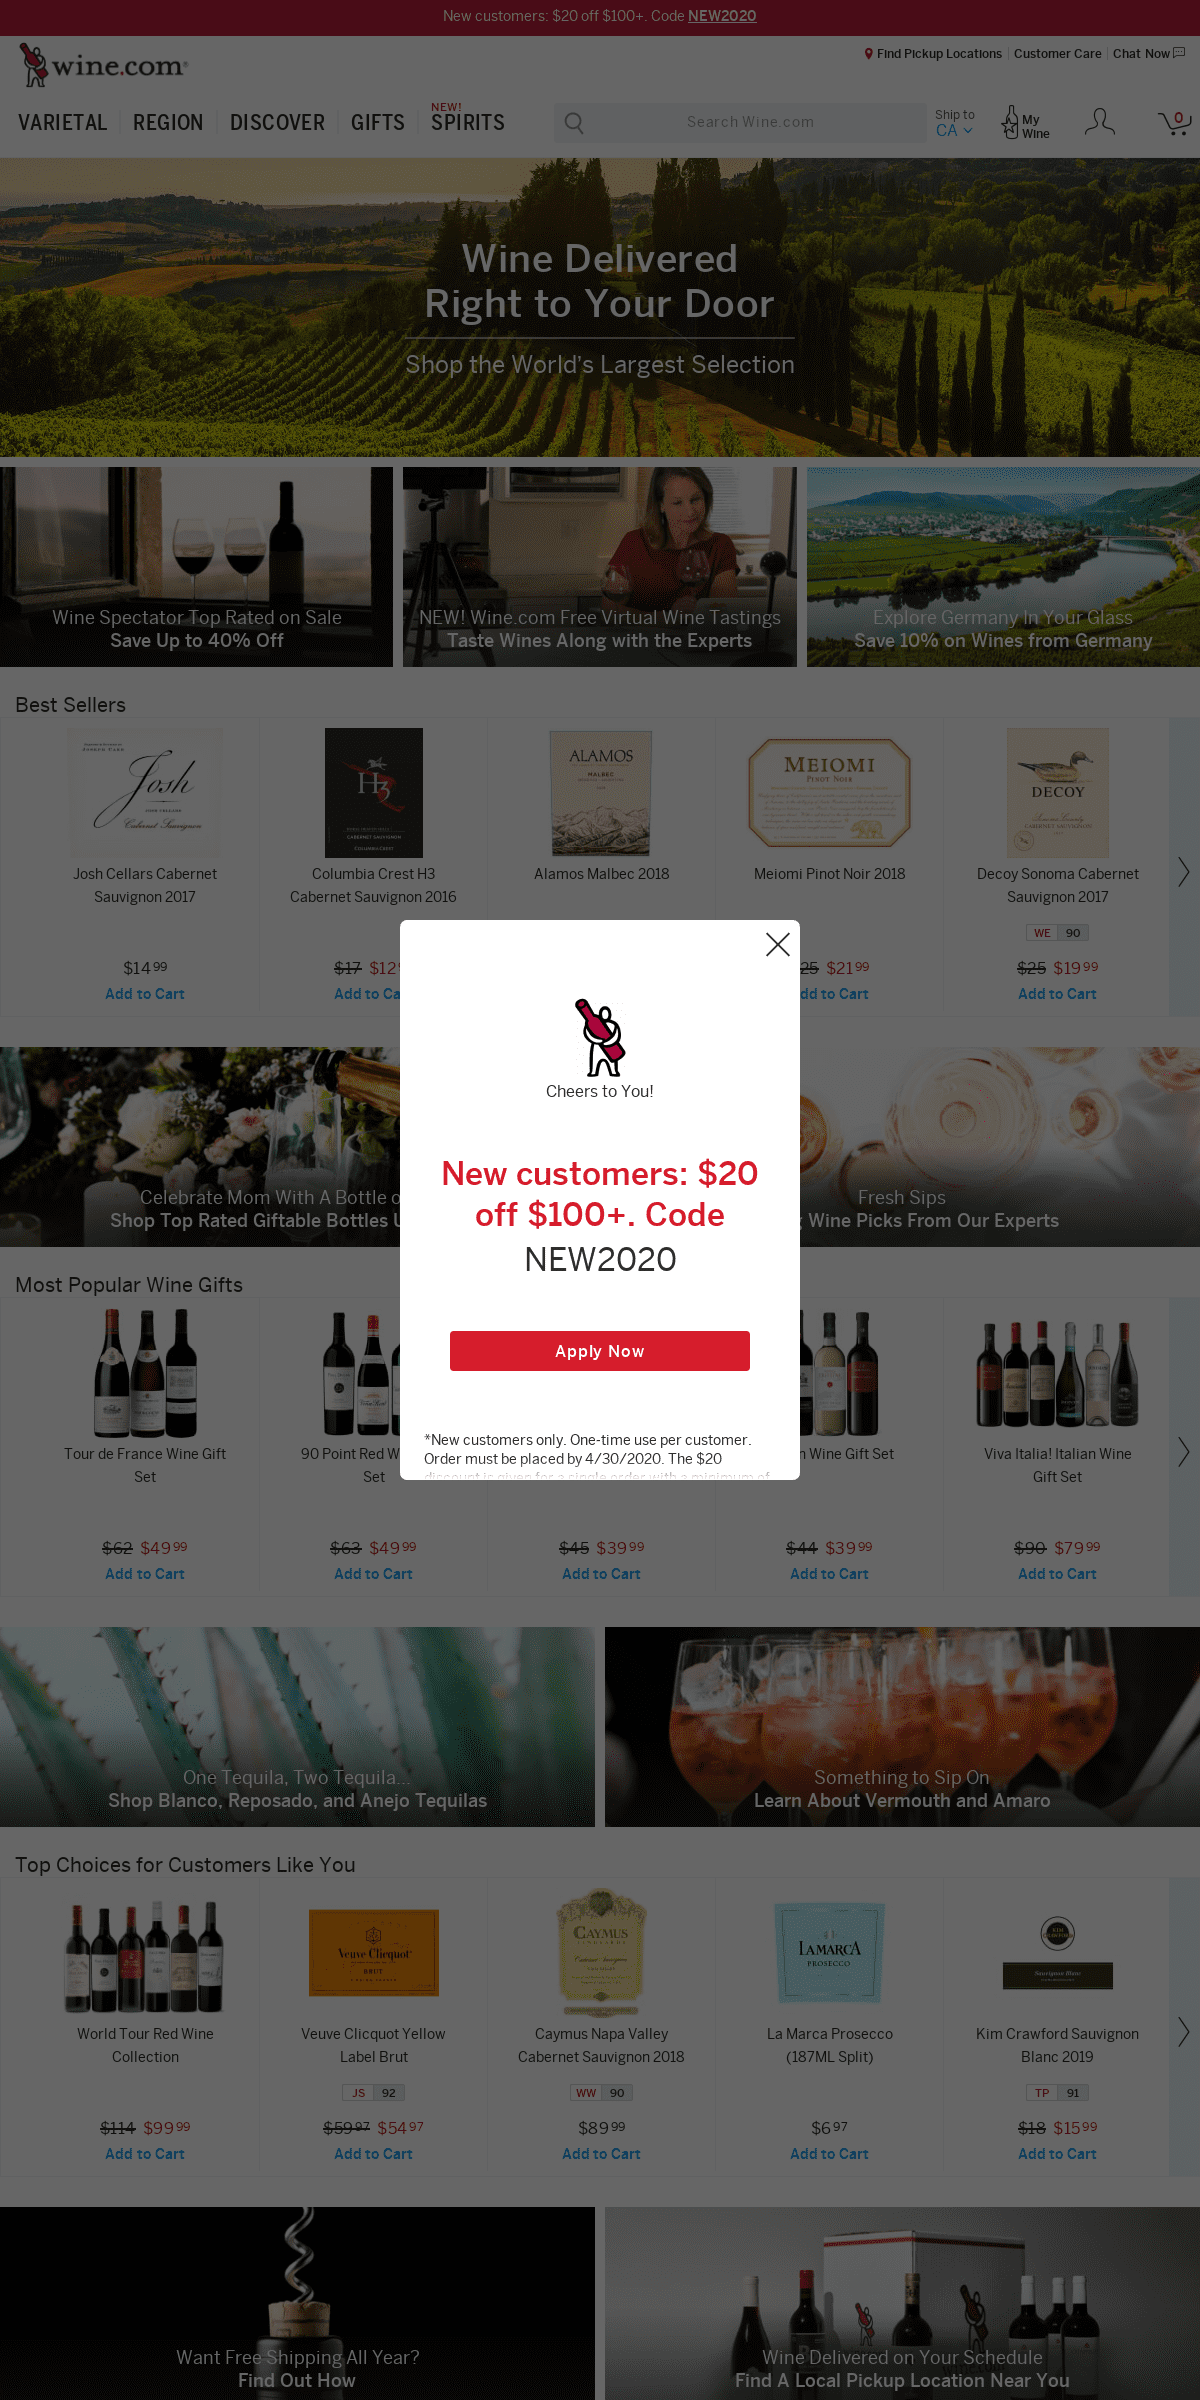 A complete backup of wine.com